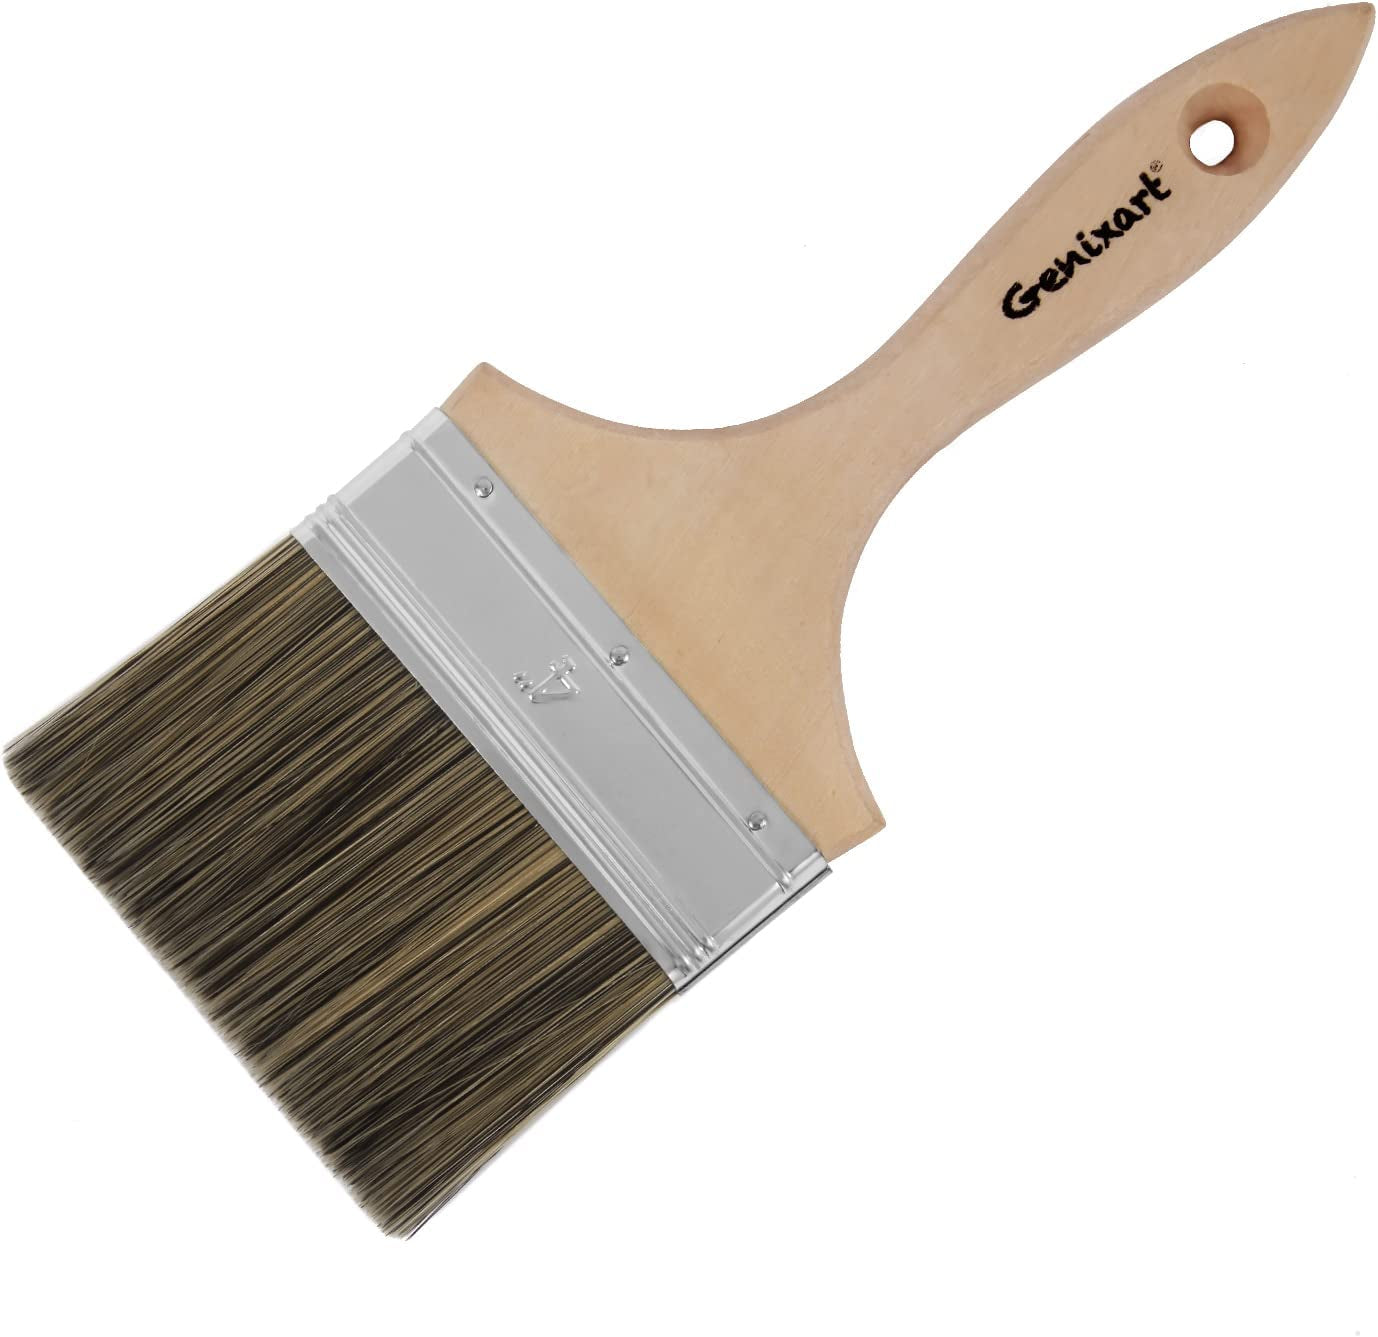 Genixart, Genixart 4" Chip Brush, 100Mm Professional Masonry Paint Brush for Walls Painting Staining Varnishing Cleaning